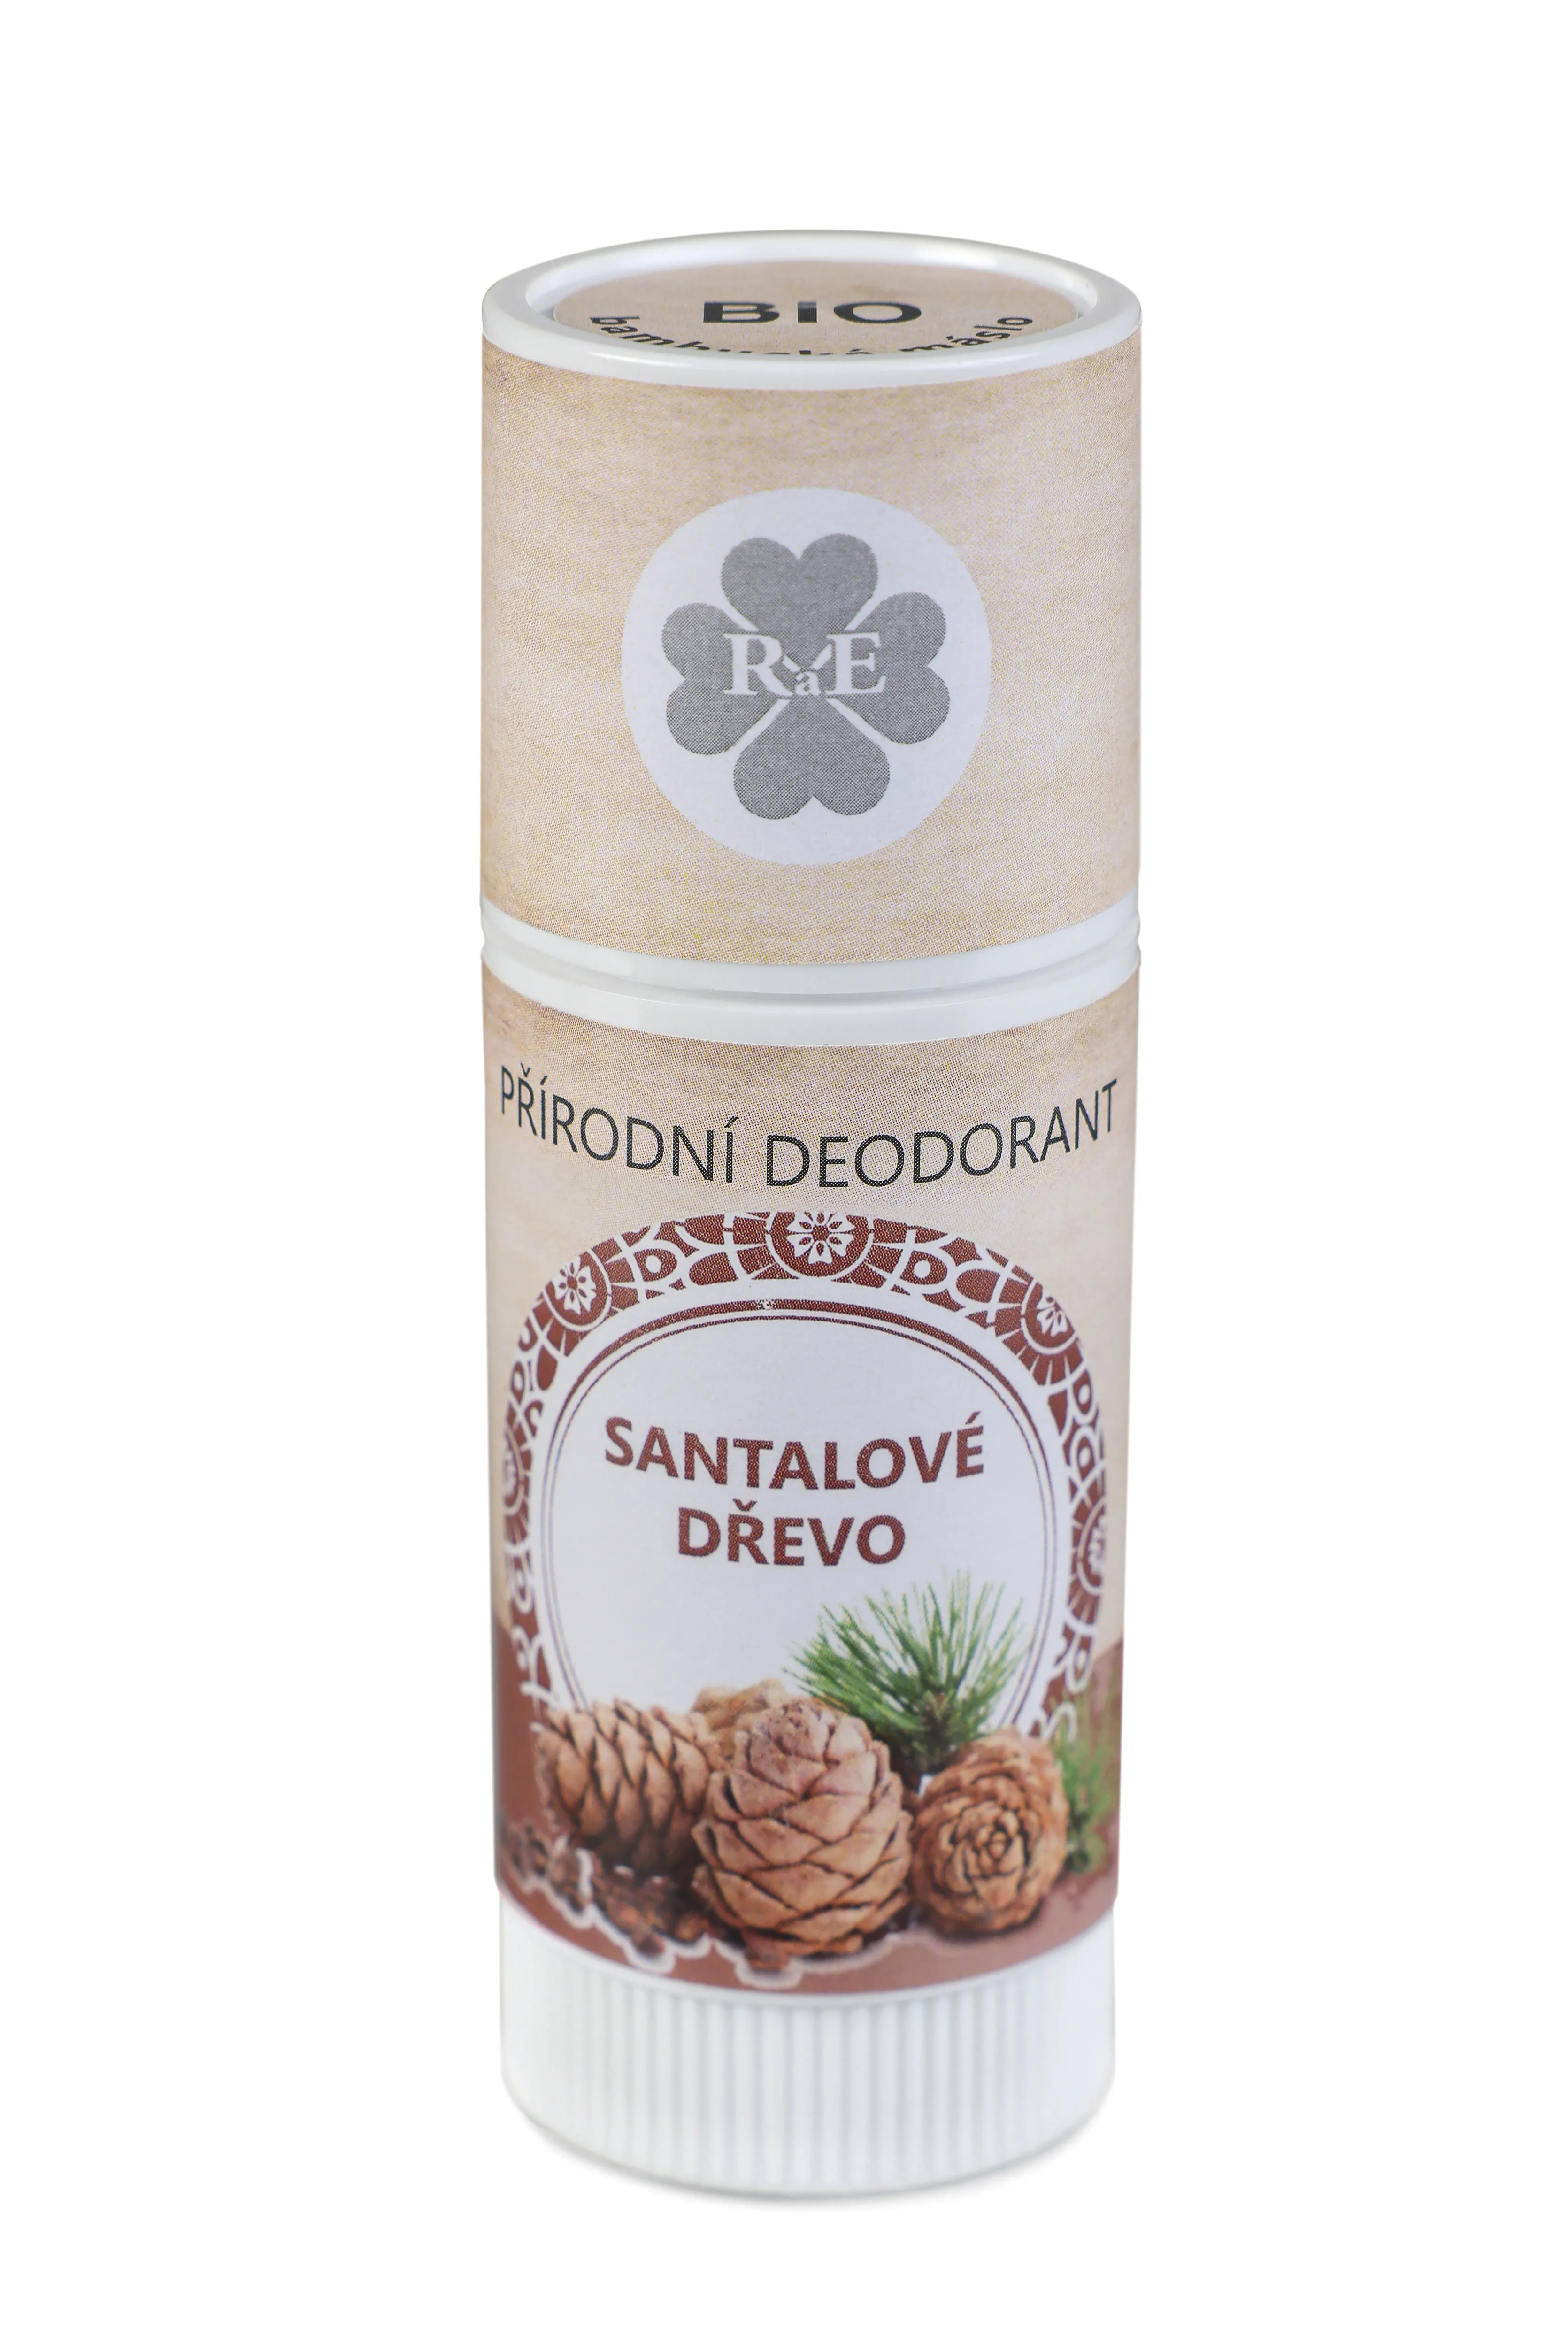 RaE Přírodní tuhý deodorant Santalové dřevo 25ml